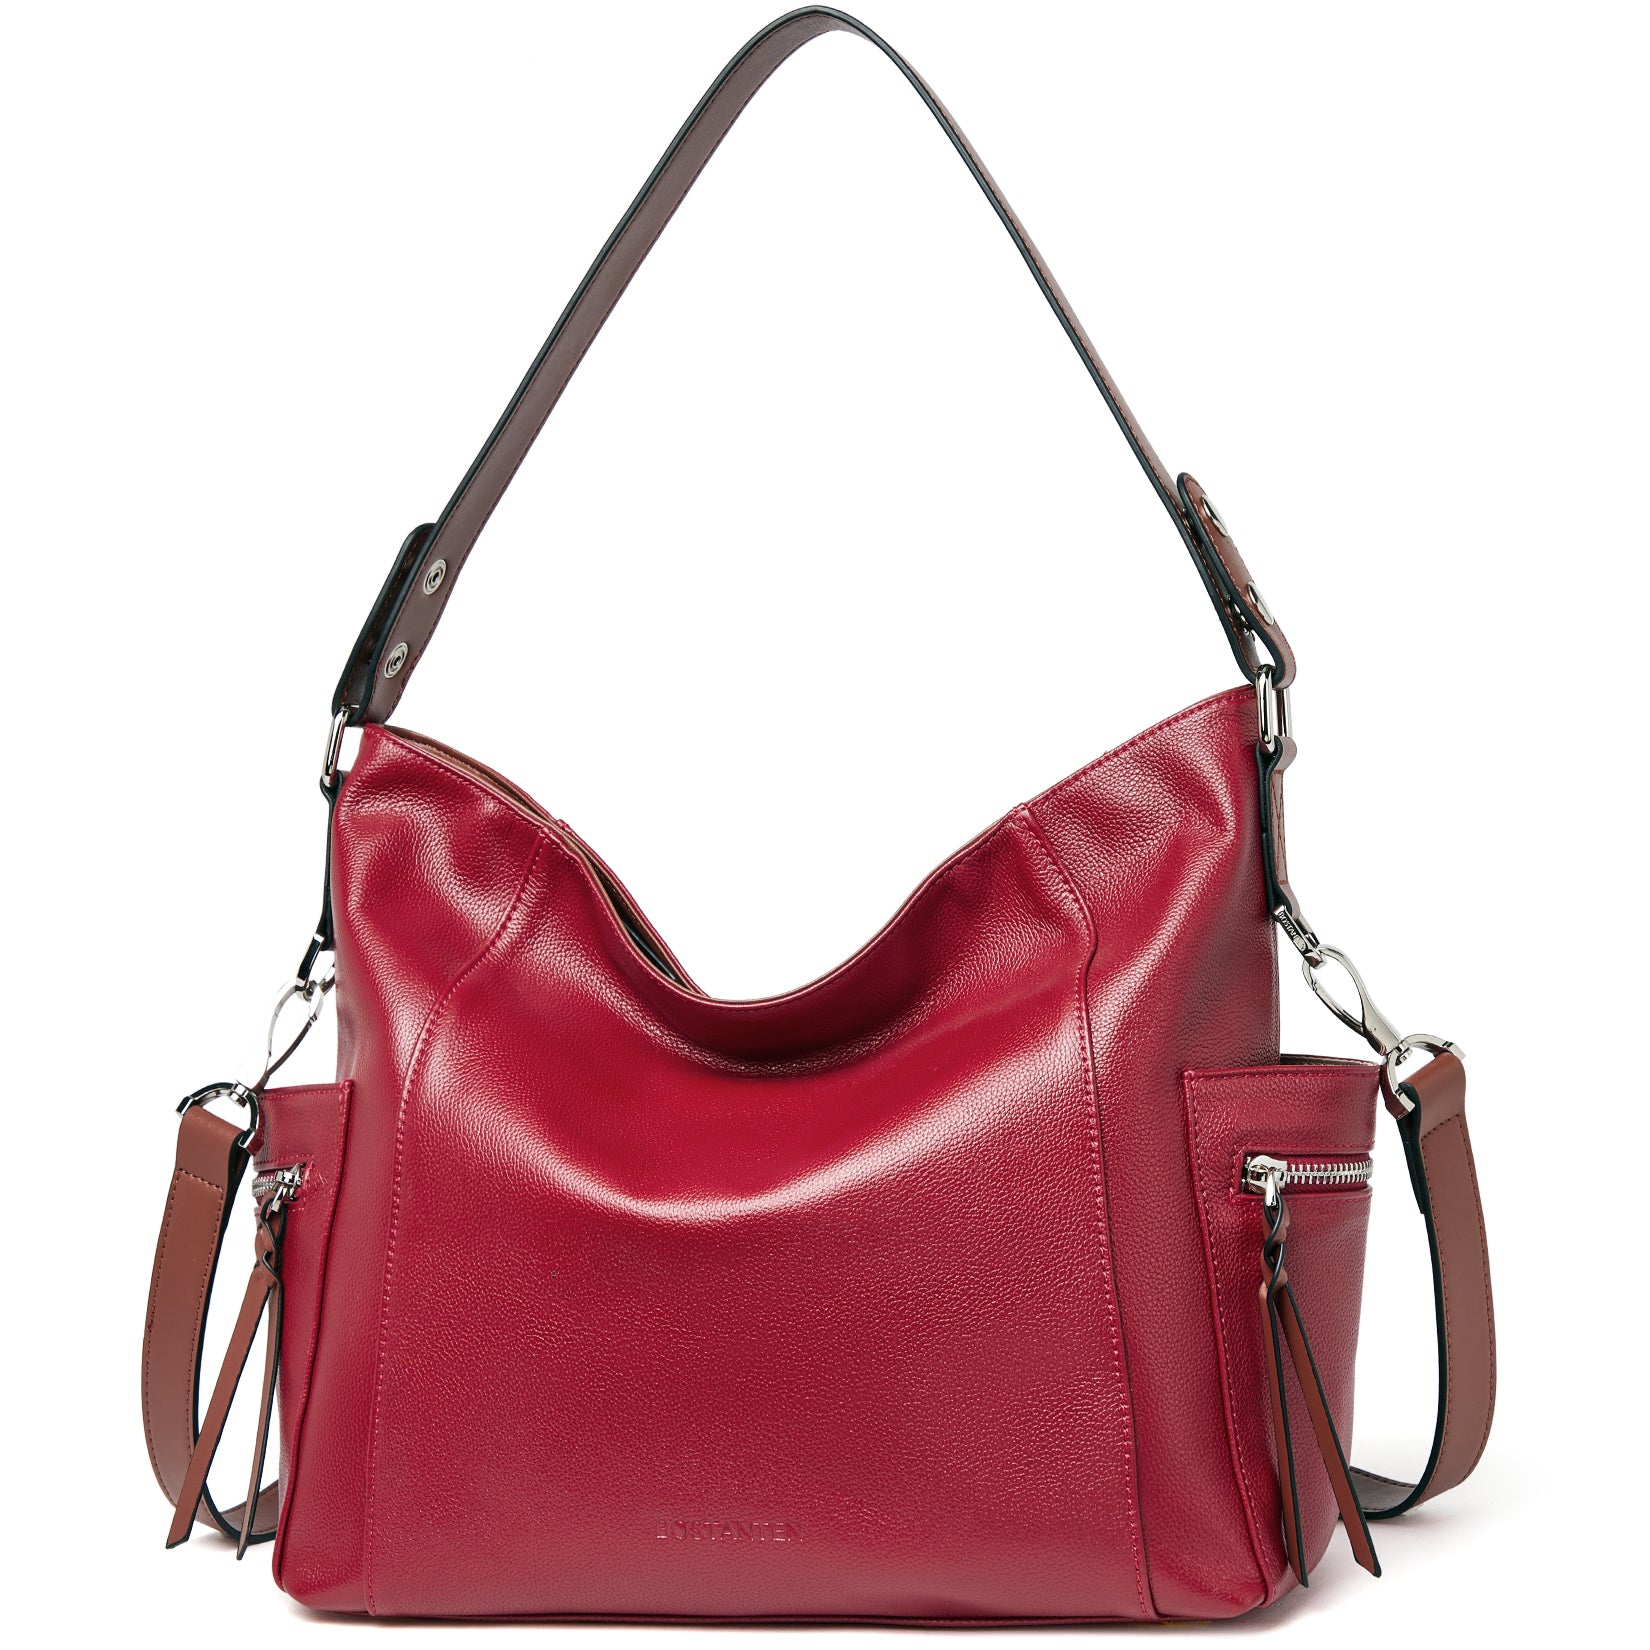 BOSTANTEN Women's Leather Handbags Ladies Large Designer Hobo Bag Vintage Shoulder Bags